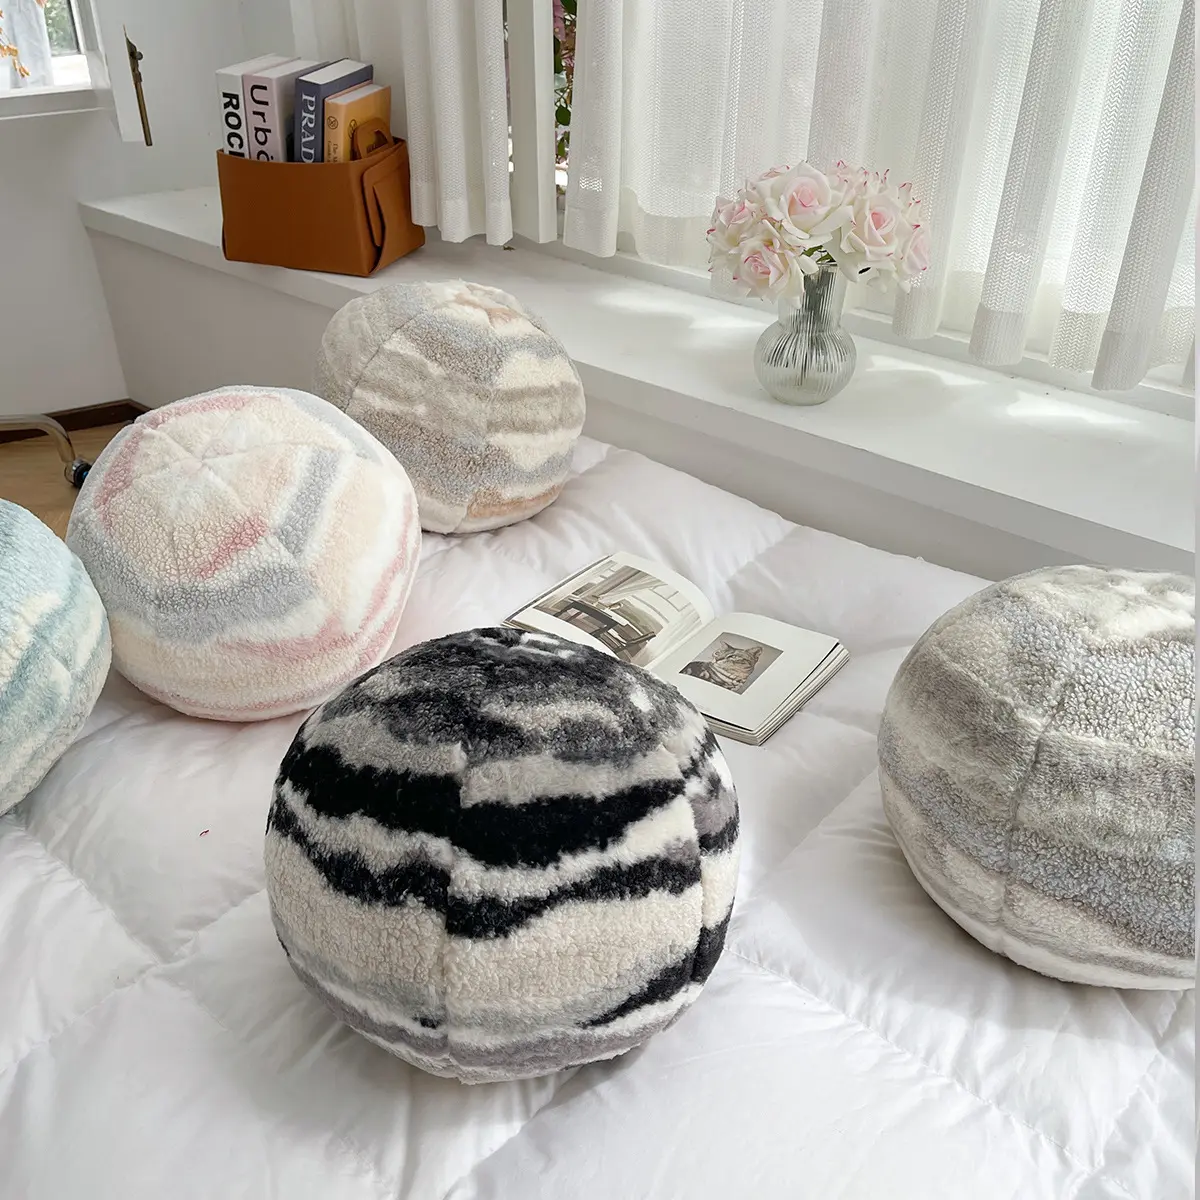 Fodera per cuscino da tiro moderna personalizzata per decorazioni per la casa fodera per cuscino in peluche a righe multicolori fodera per cuscino a sfera